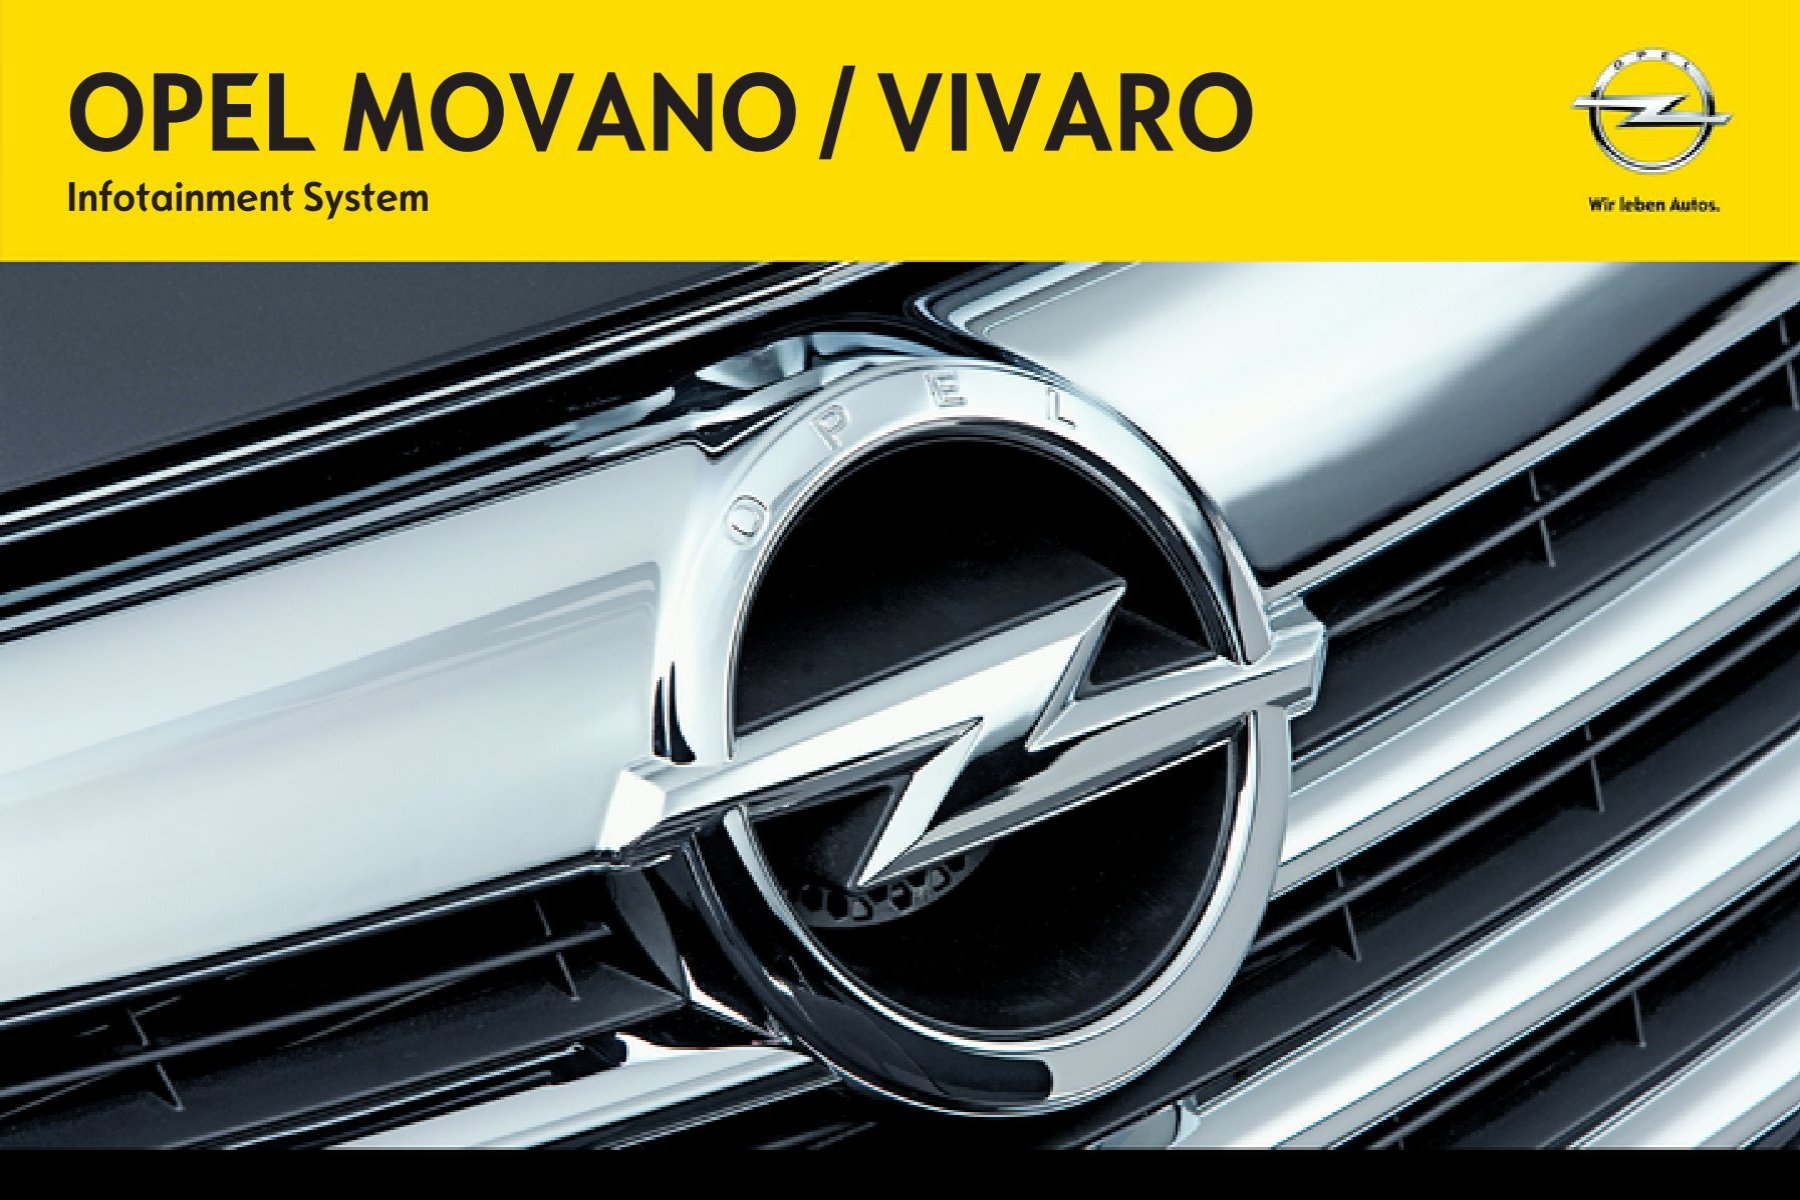 Opel Movano et VivaroInfotainment System Ann&eacute;e mod&egrave;le  2013 - Movano et VivaroInfotainment System Ann&eacute;e  mod&egrave;le 2013manuel d'utilisation